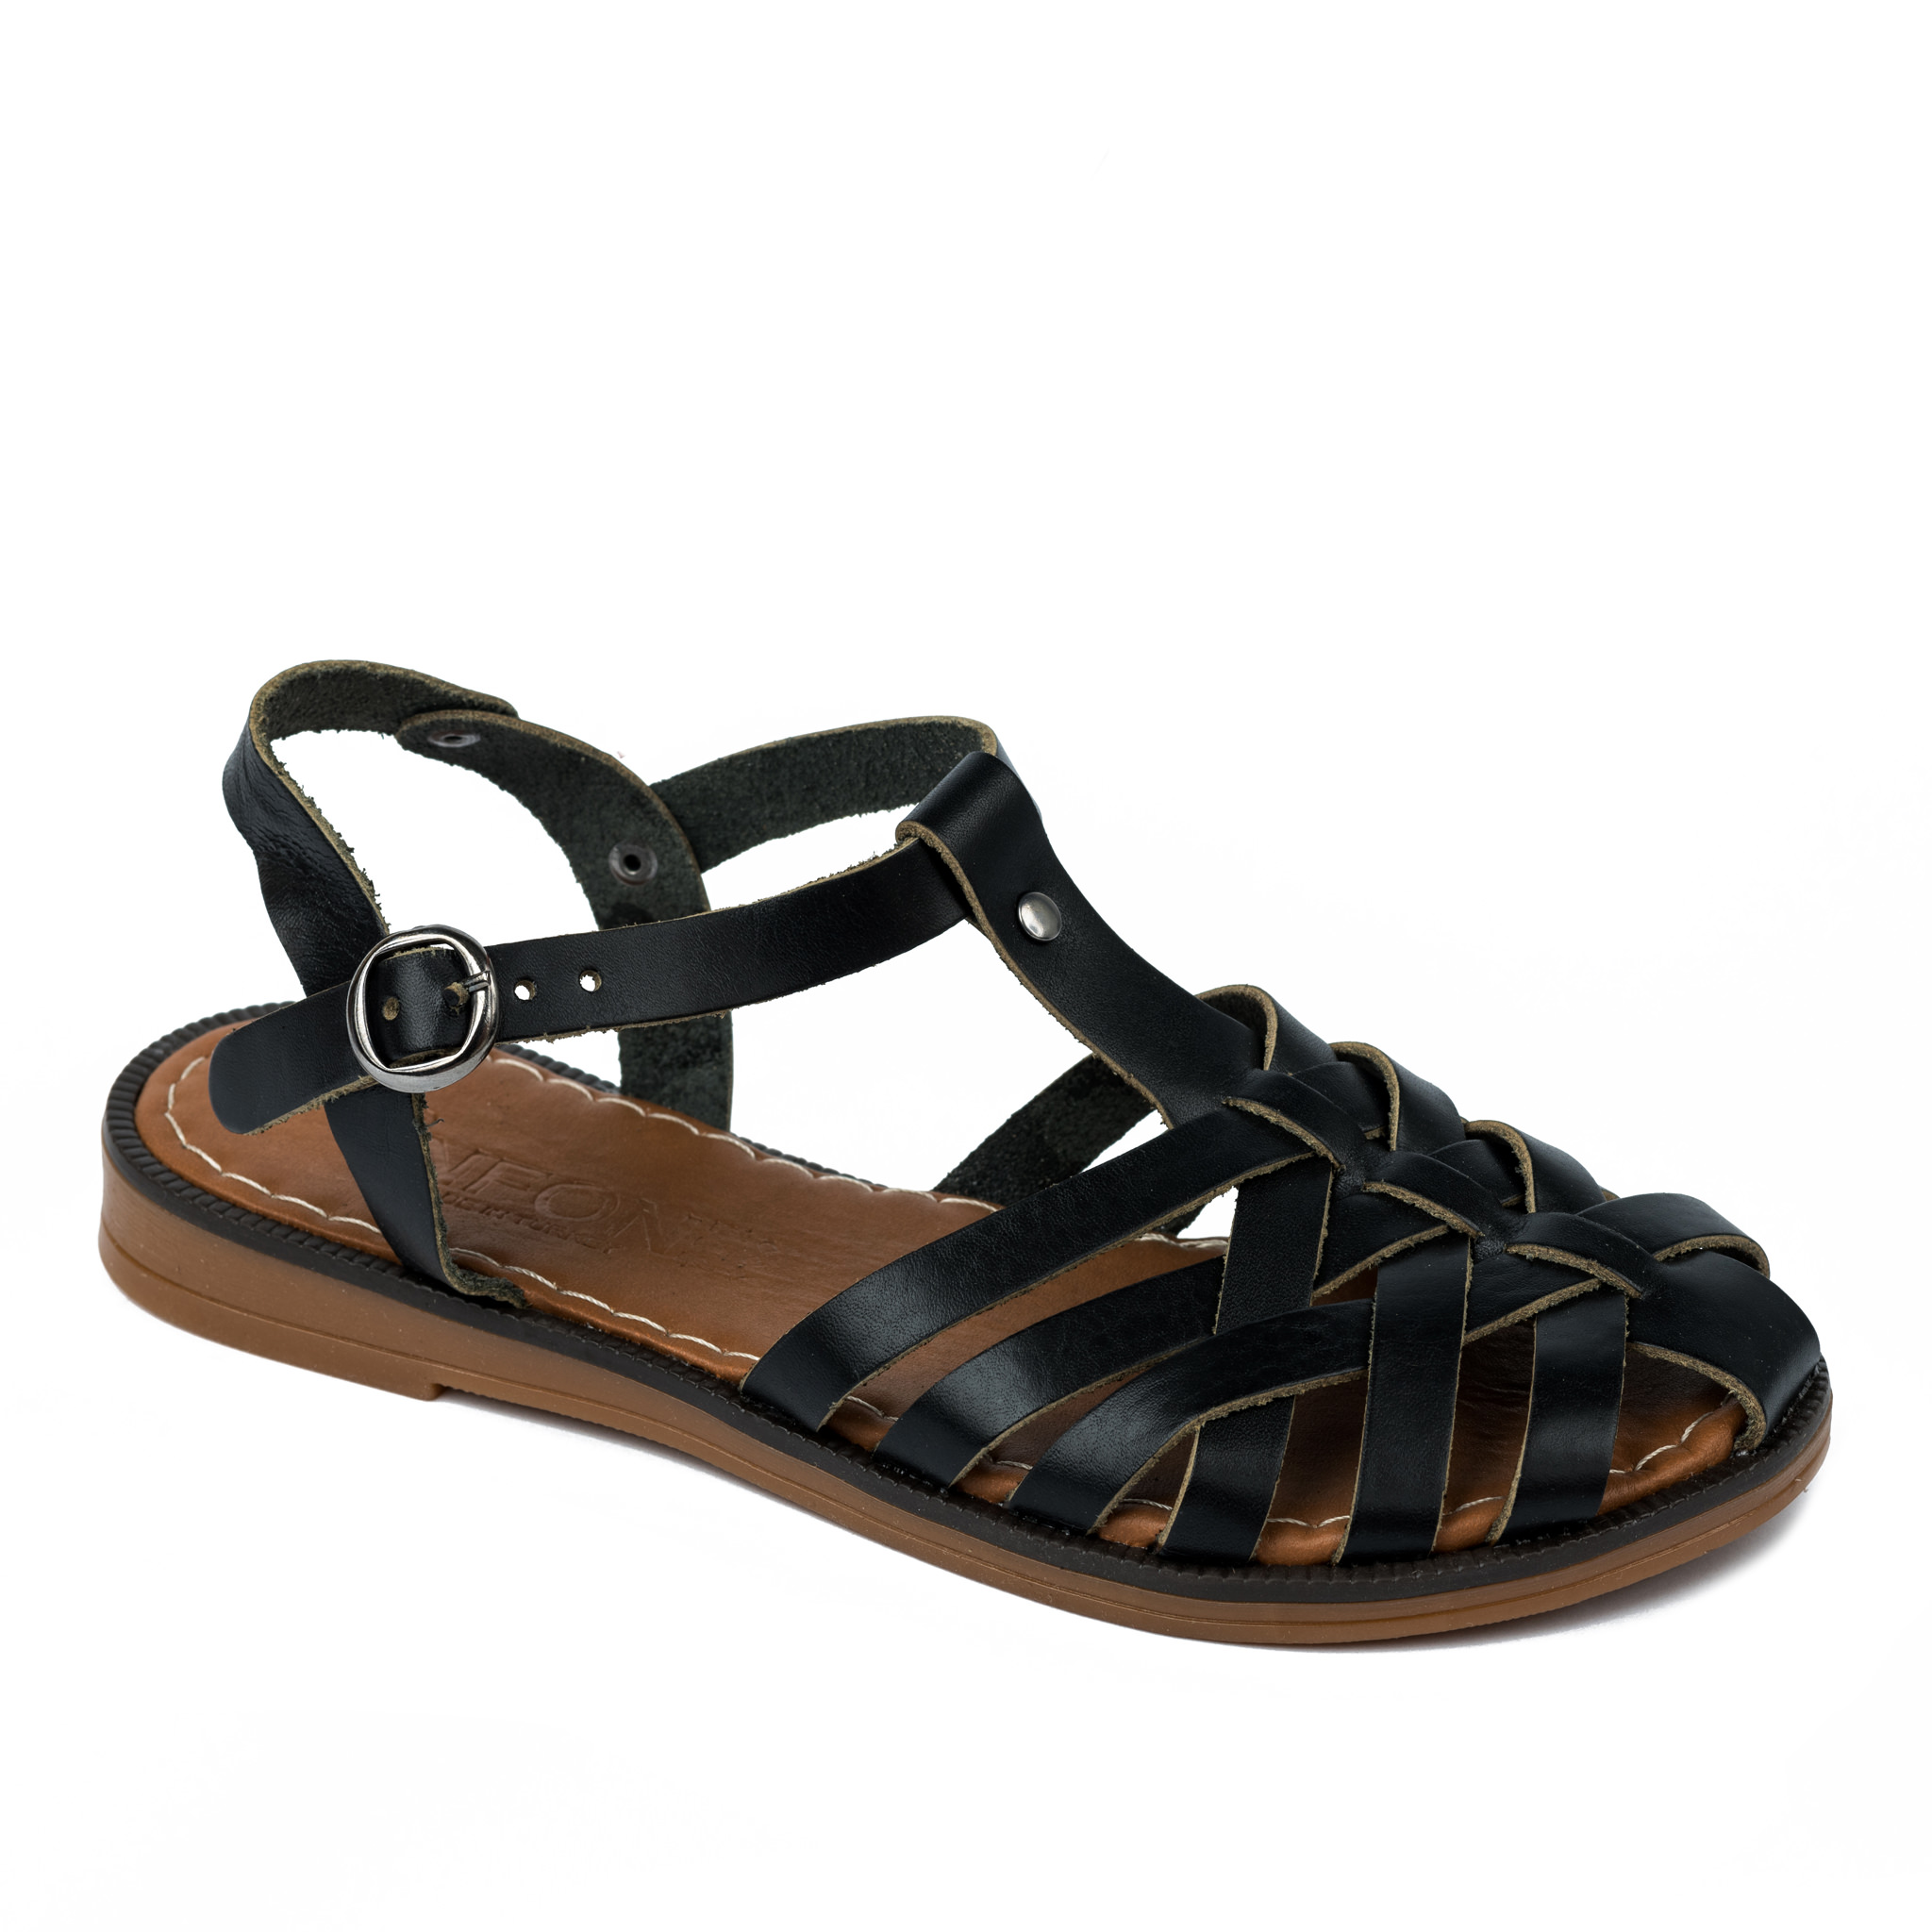 Women sandals A336 - BLACK